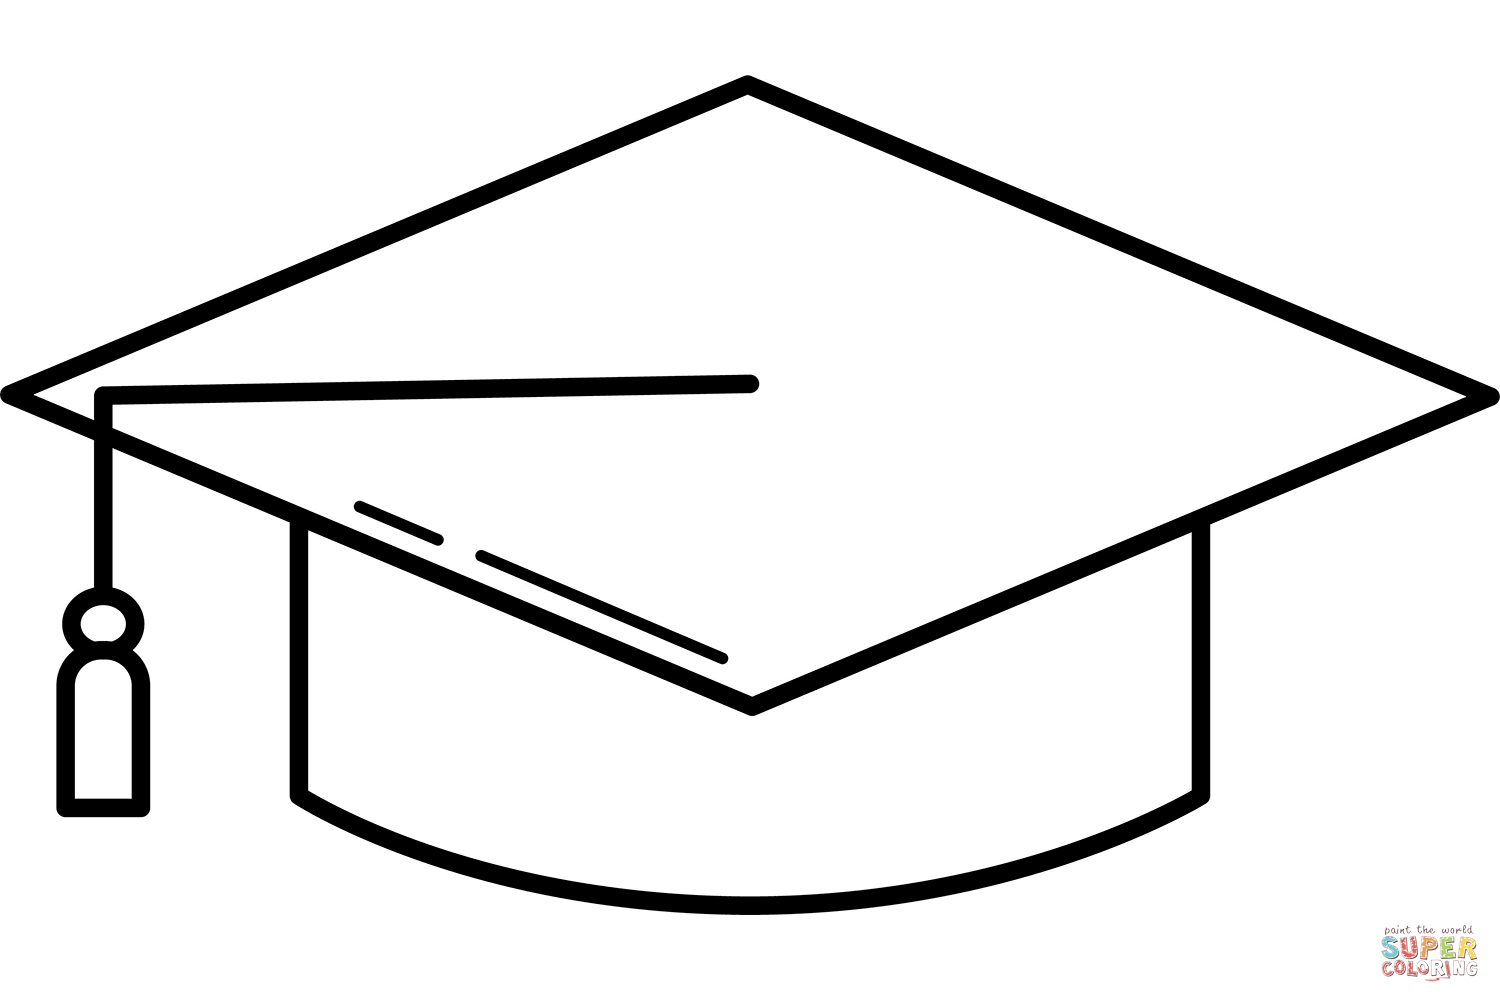 Graduation cap coloring page